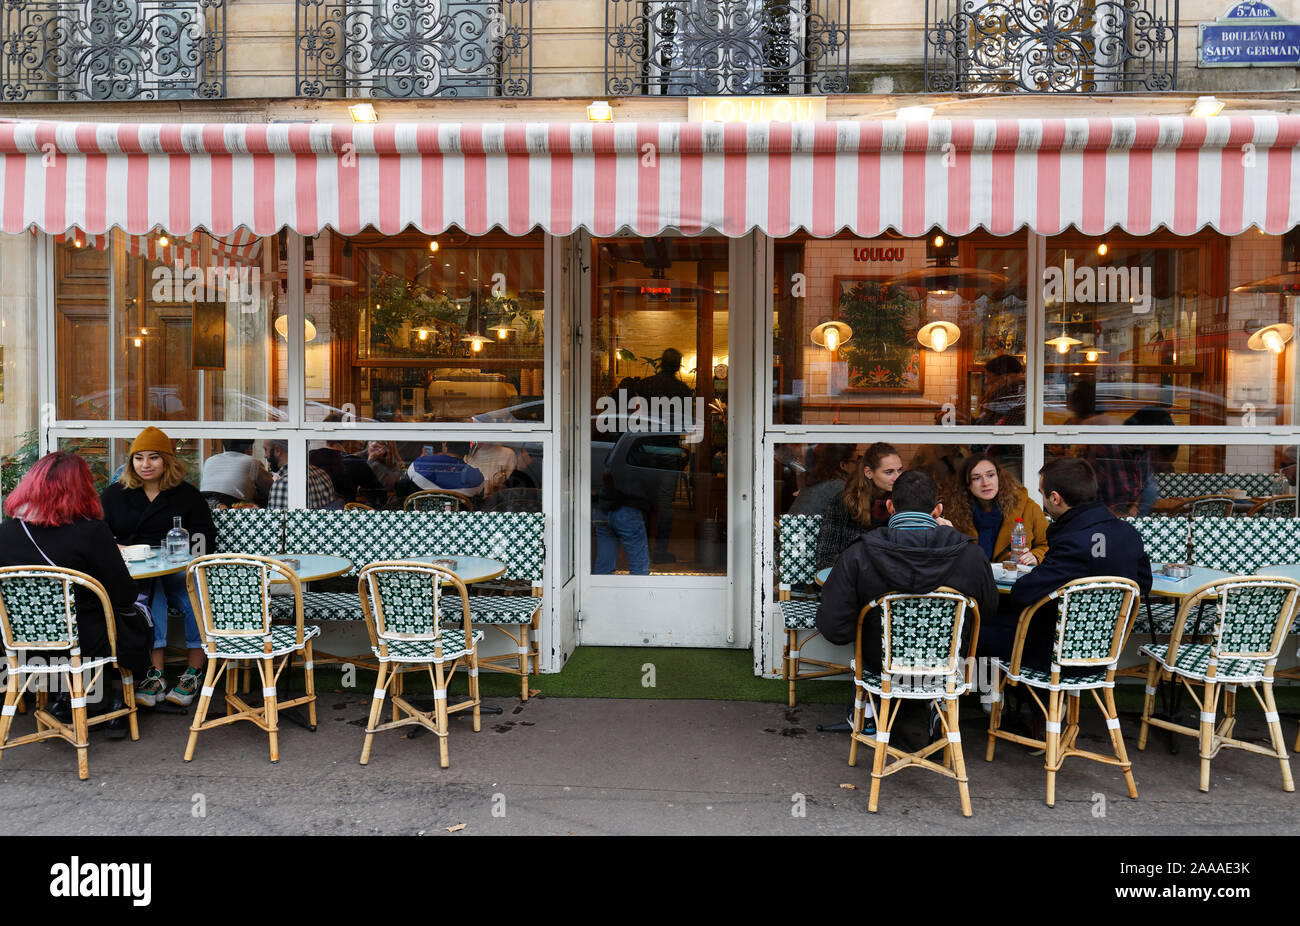 The Best Restaurants in Paris🇫🇷 #paris #parisfrance #parisrestaurant, lou lou restaurant in paris